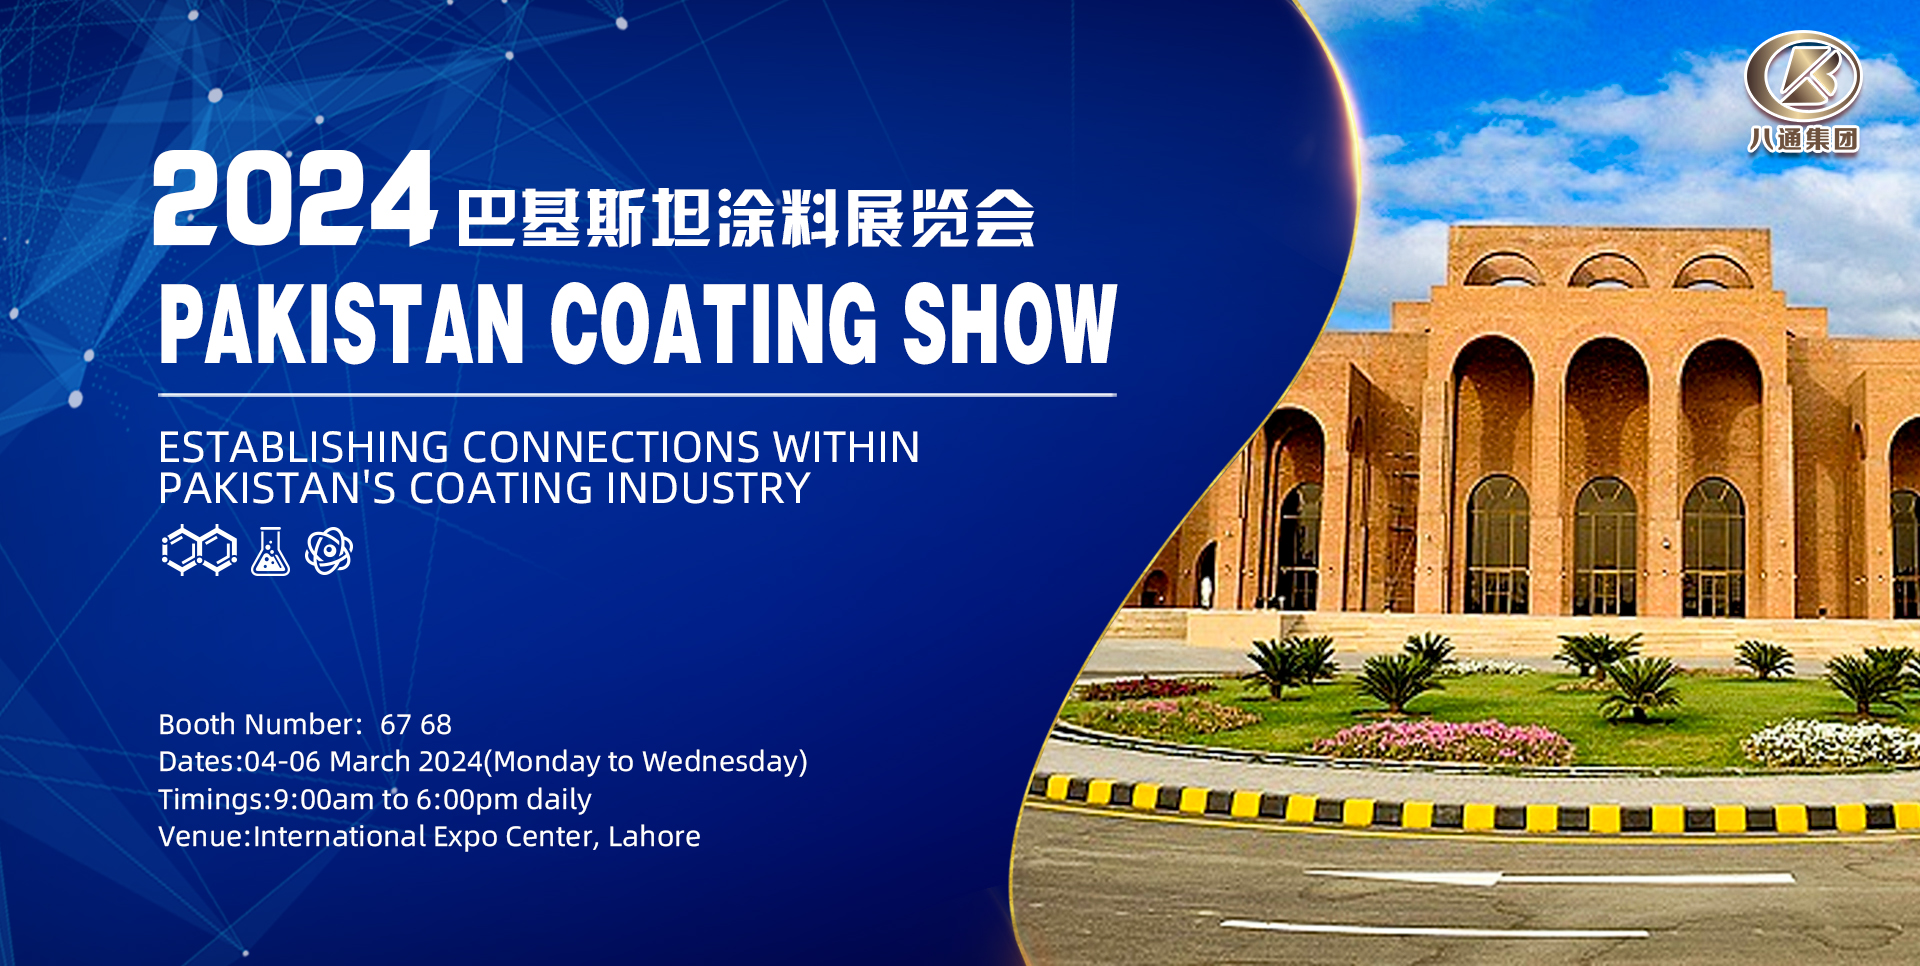 Pakistan coating show 2024